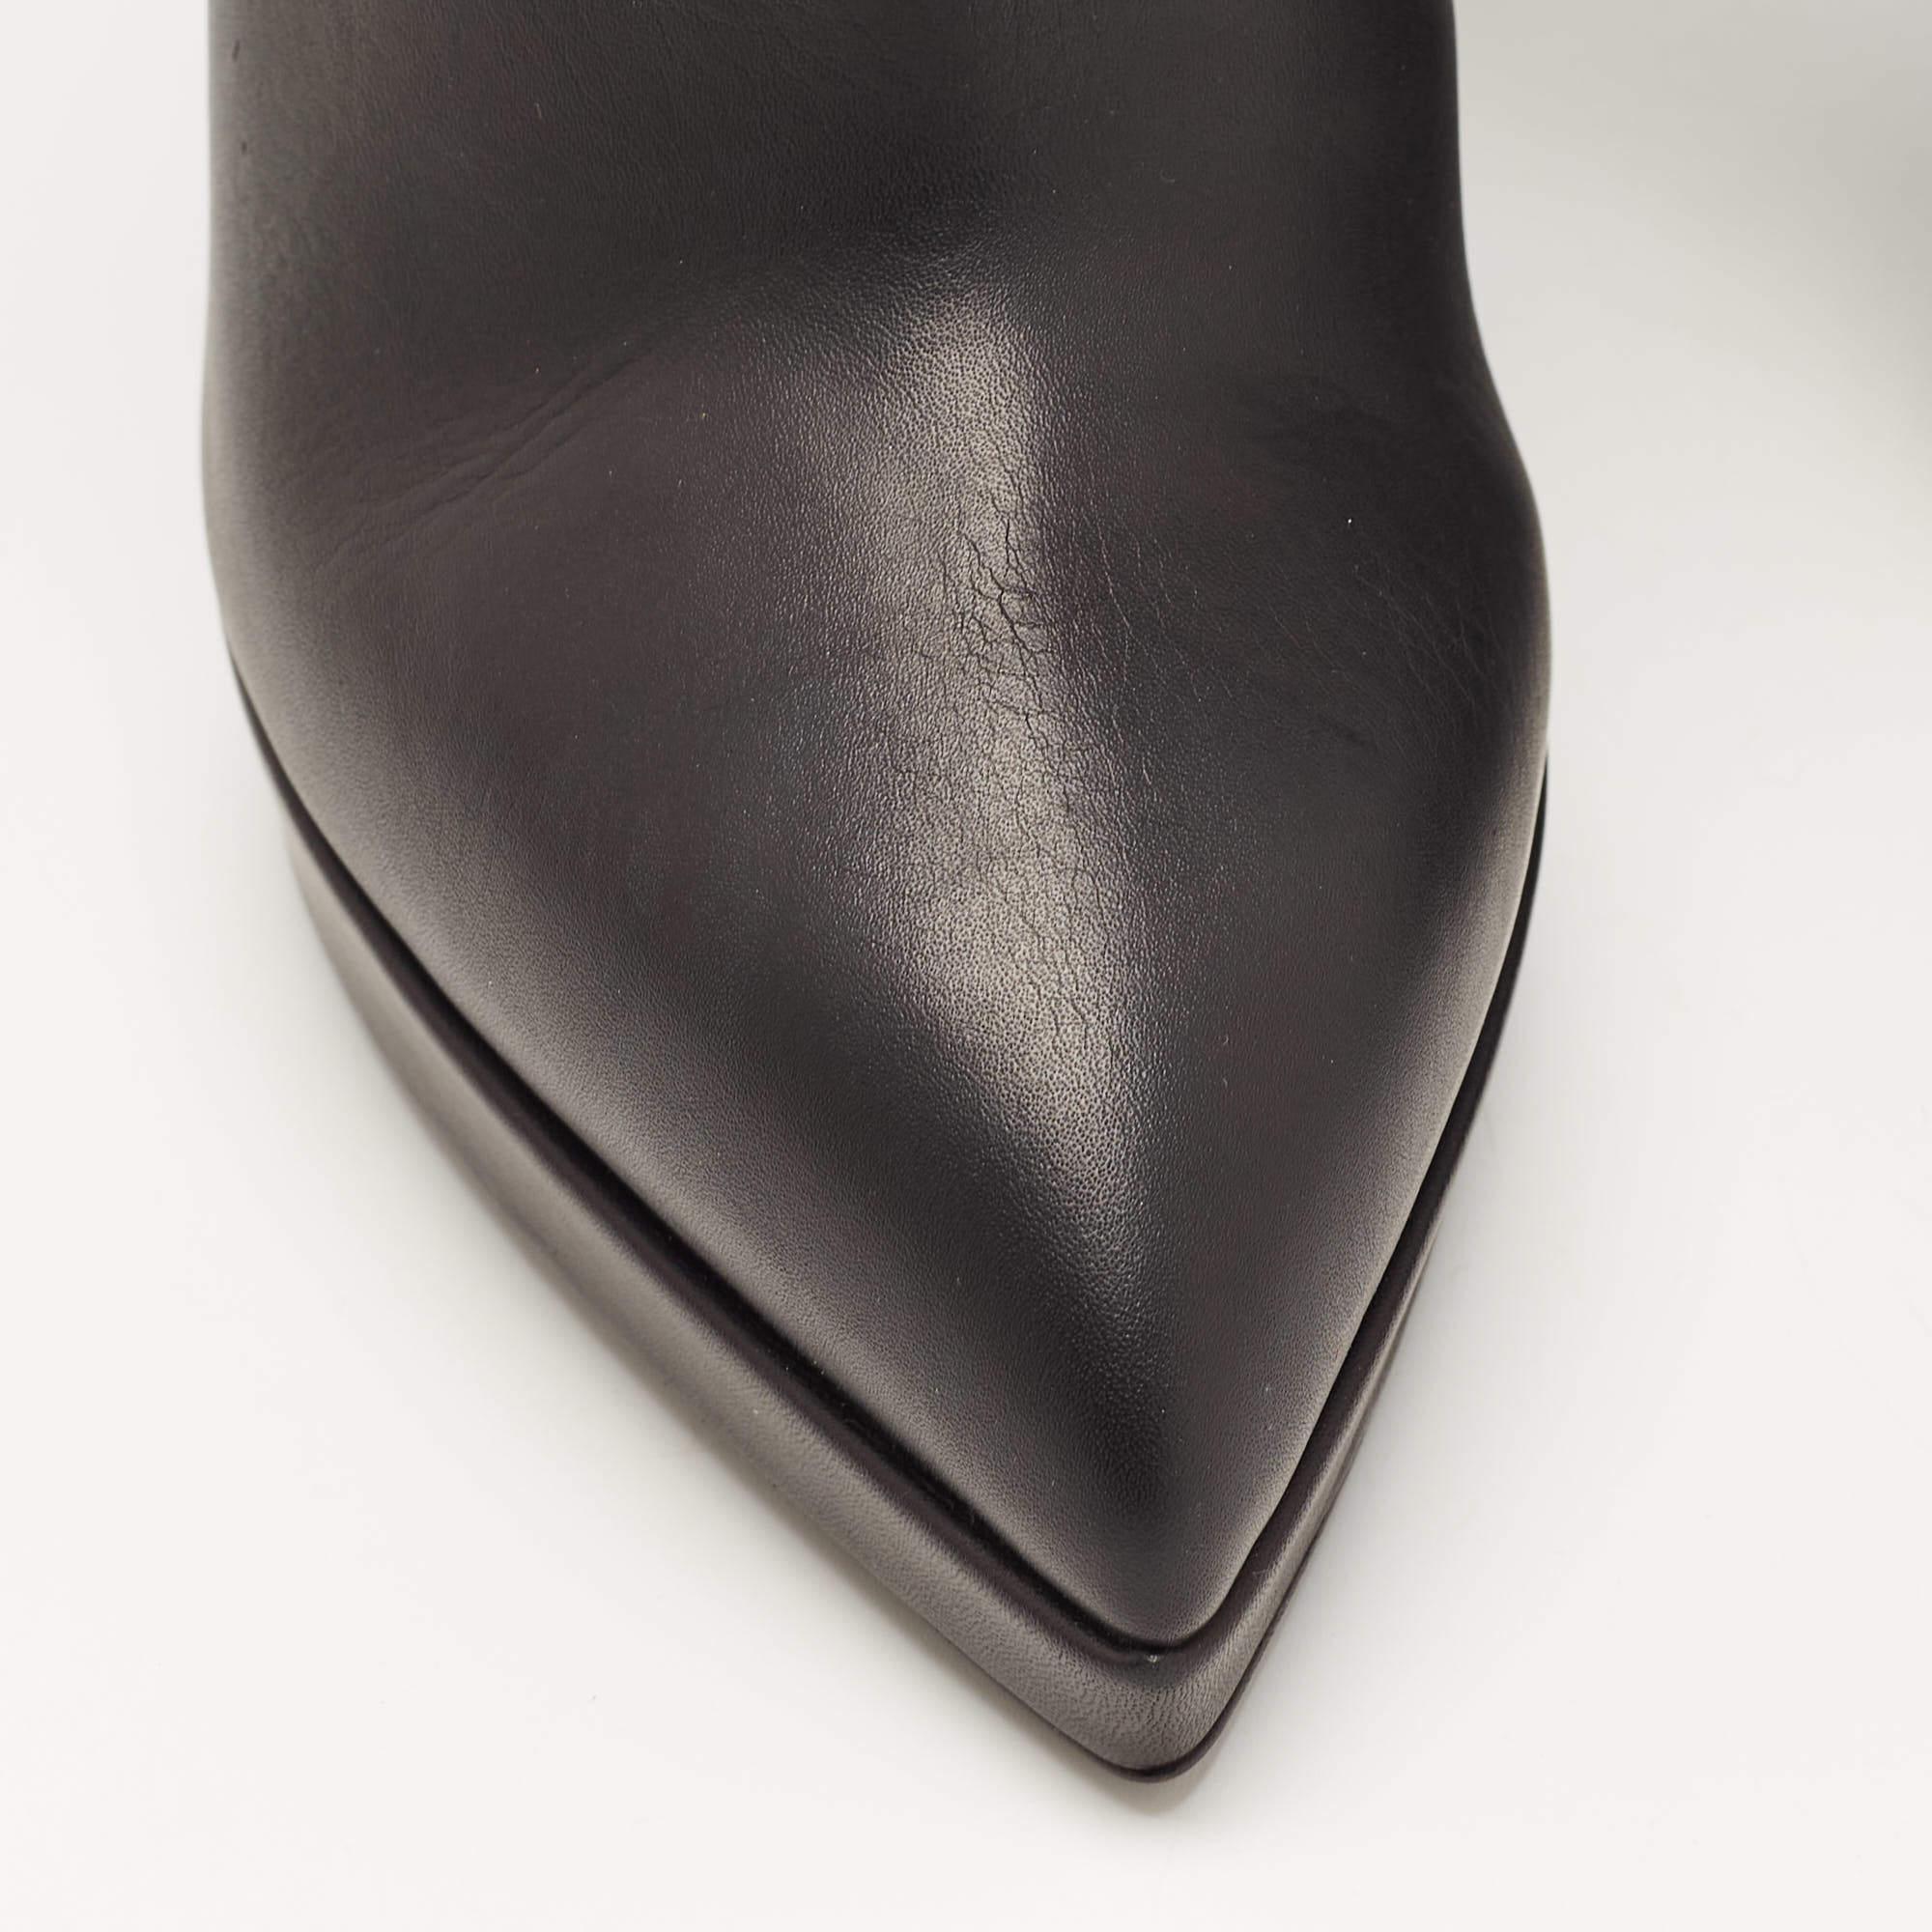 Giuseppe Zanotti Black Leather Emy Stud Ankle Boots Size 41 For Sale 2